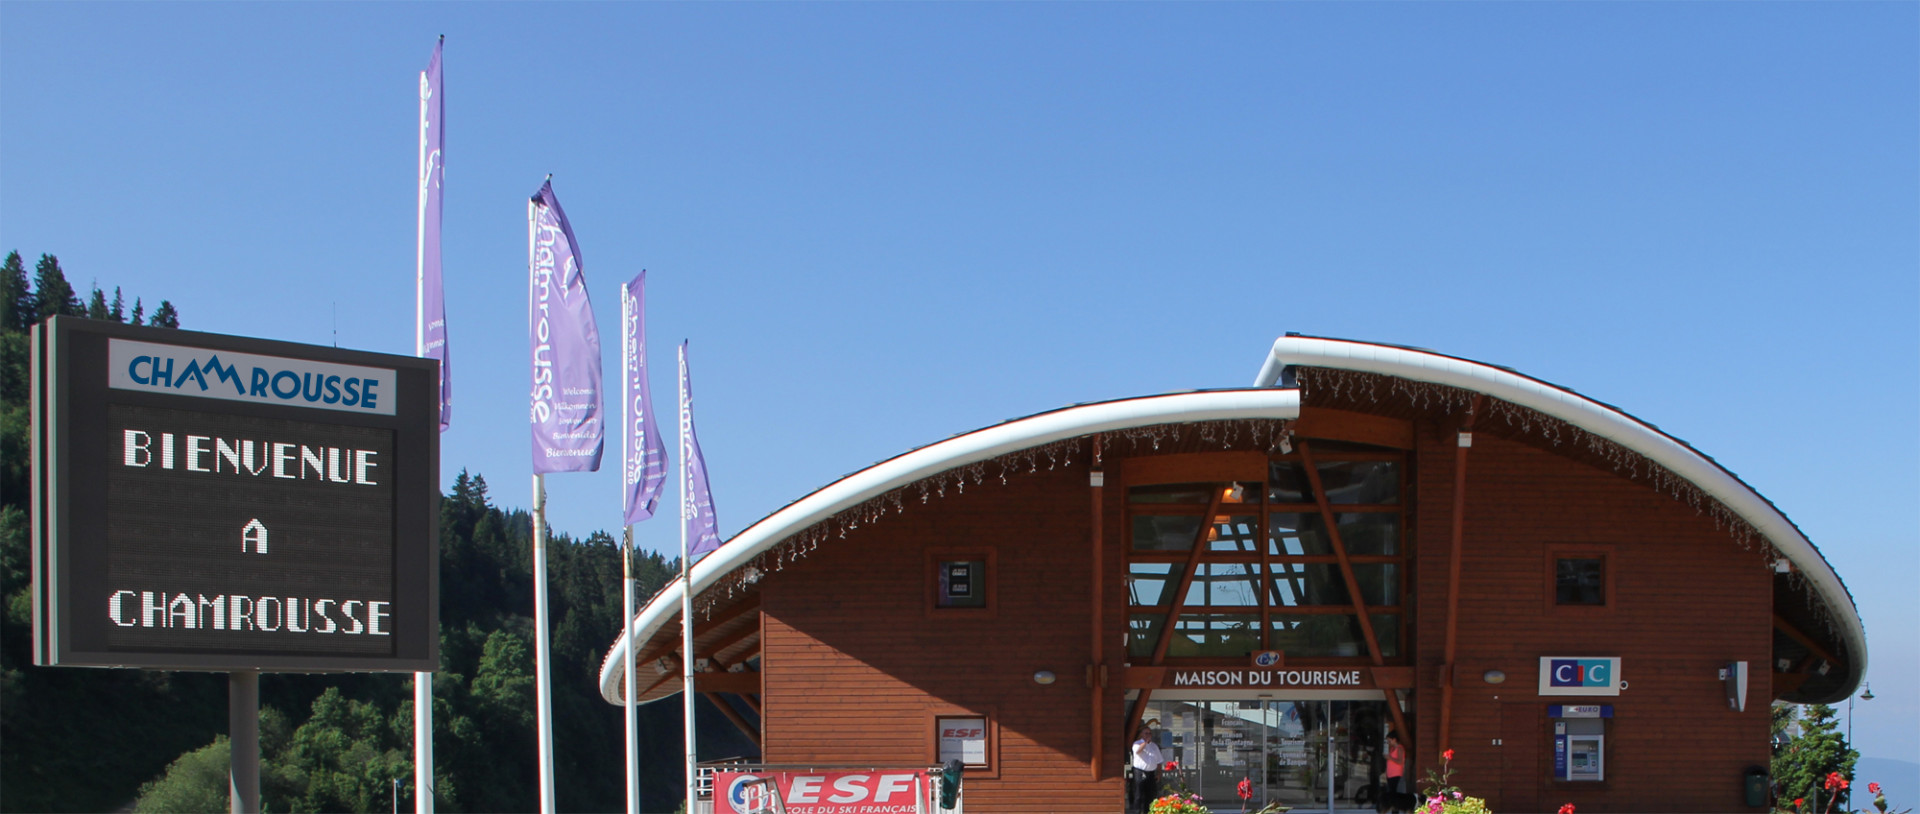 Chamrousse office tourisme 1650 recoin 1750 roche béranger station ski montagne grenoble isère alpes france